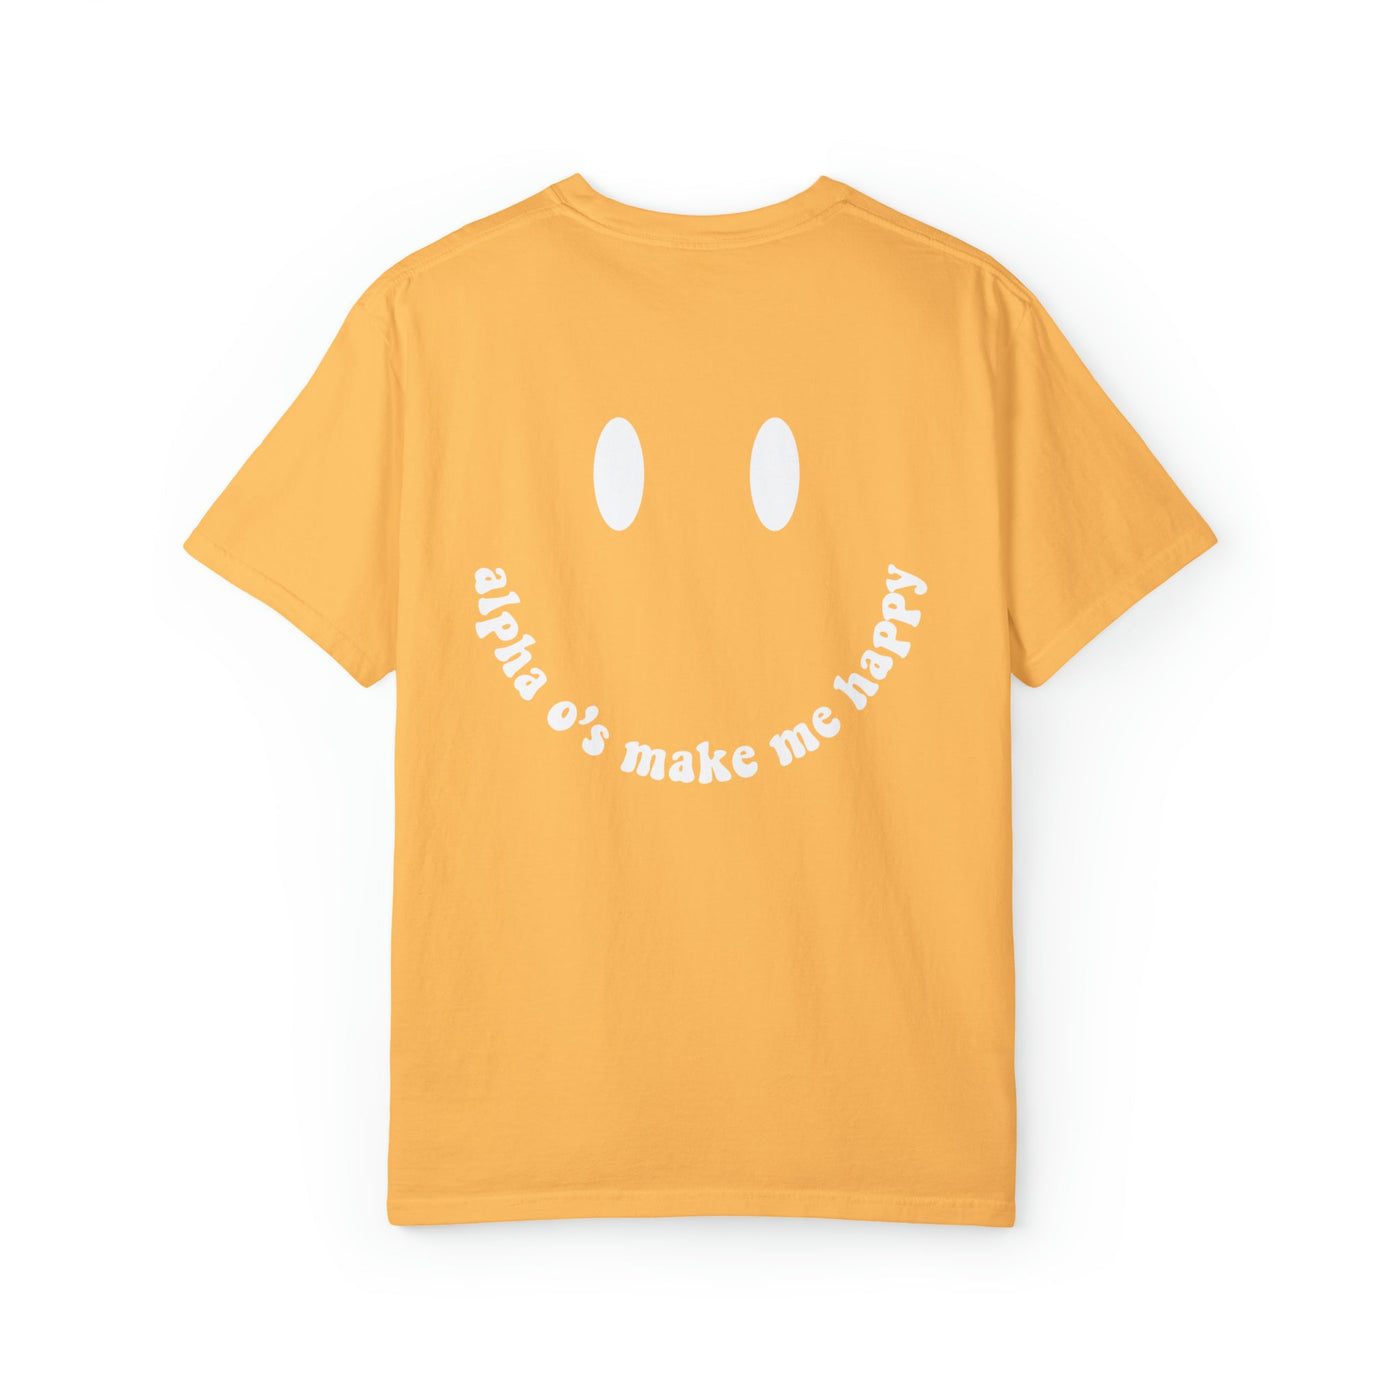 Alpha Omicron Pi's Make Me Happy Sorority Comfy T-shirt